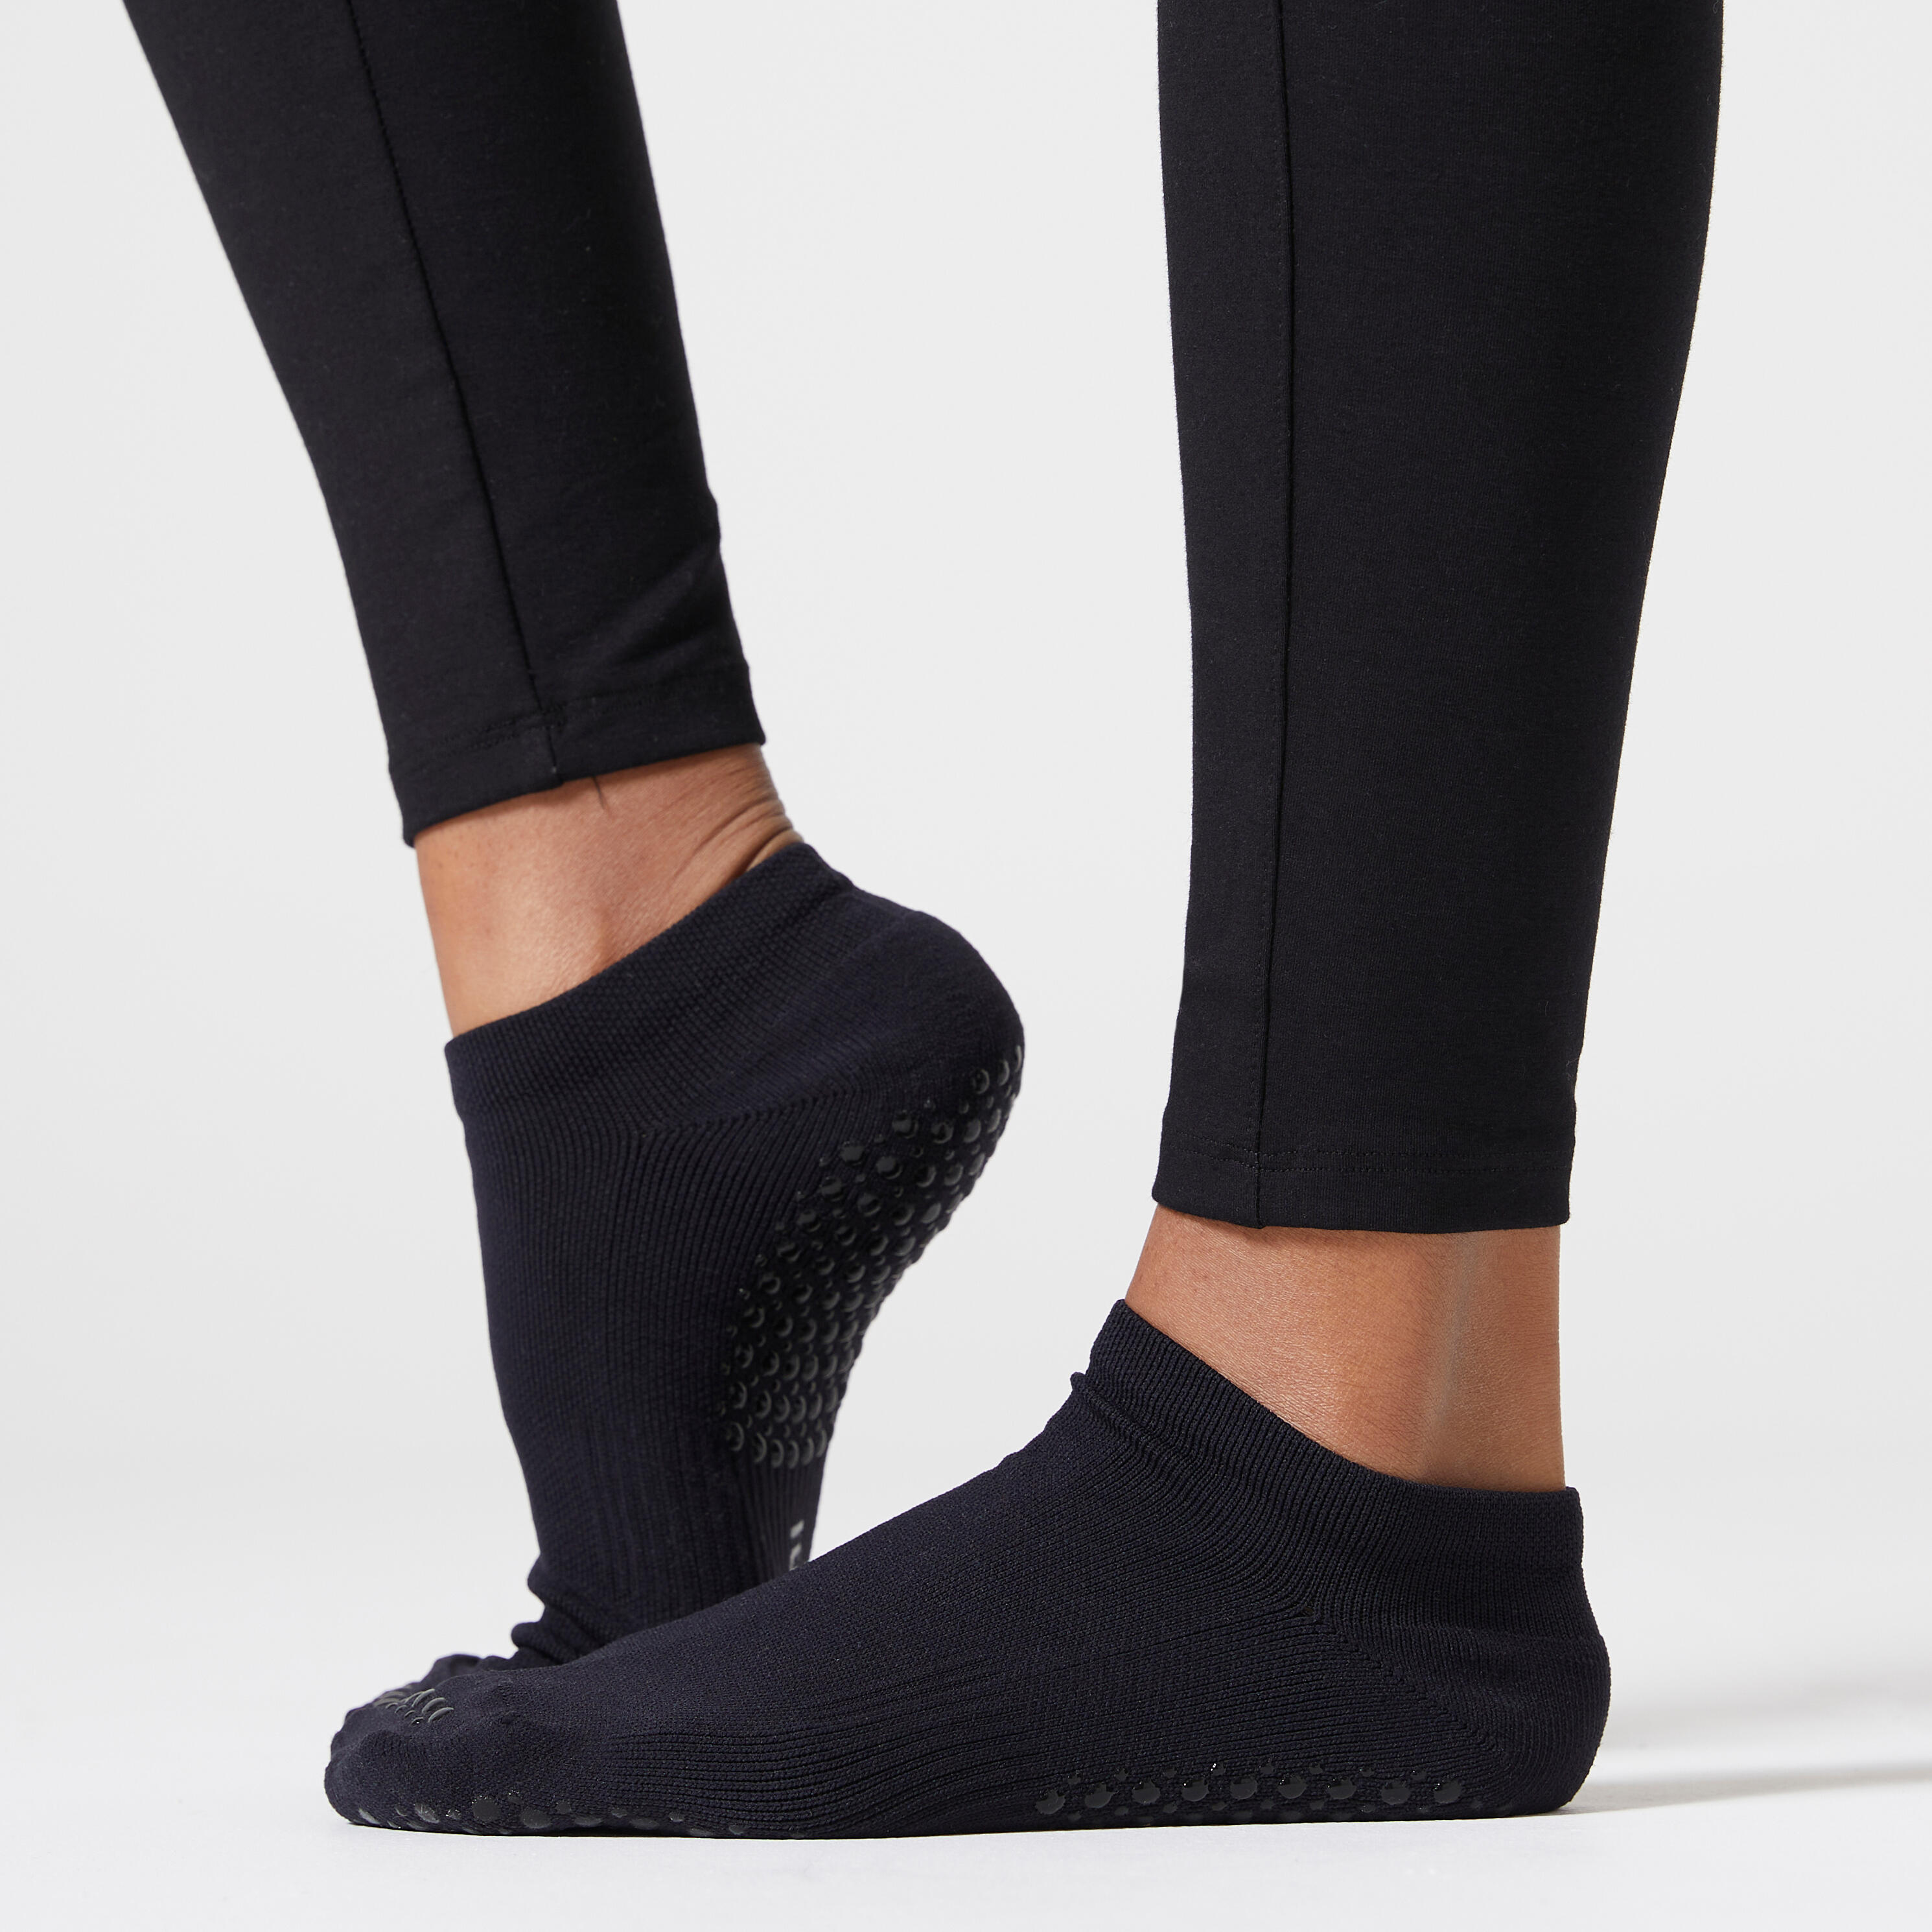 Lolmot Grip Socks for Women Non Slip Low Cut Yoga Socks Cozy